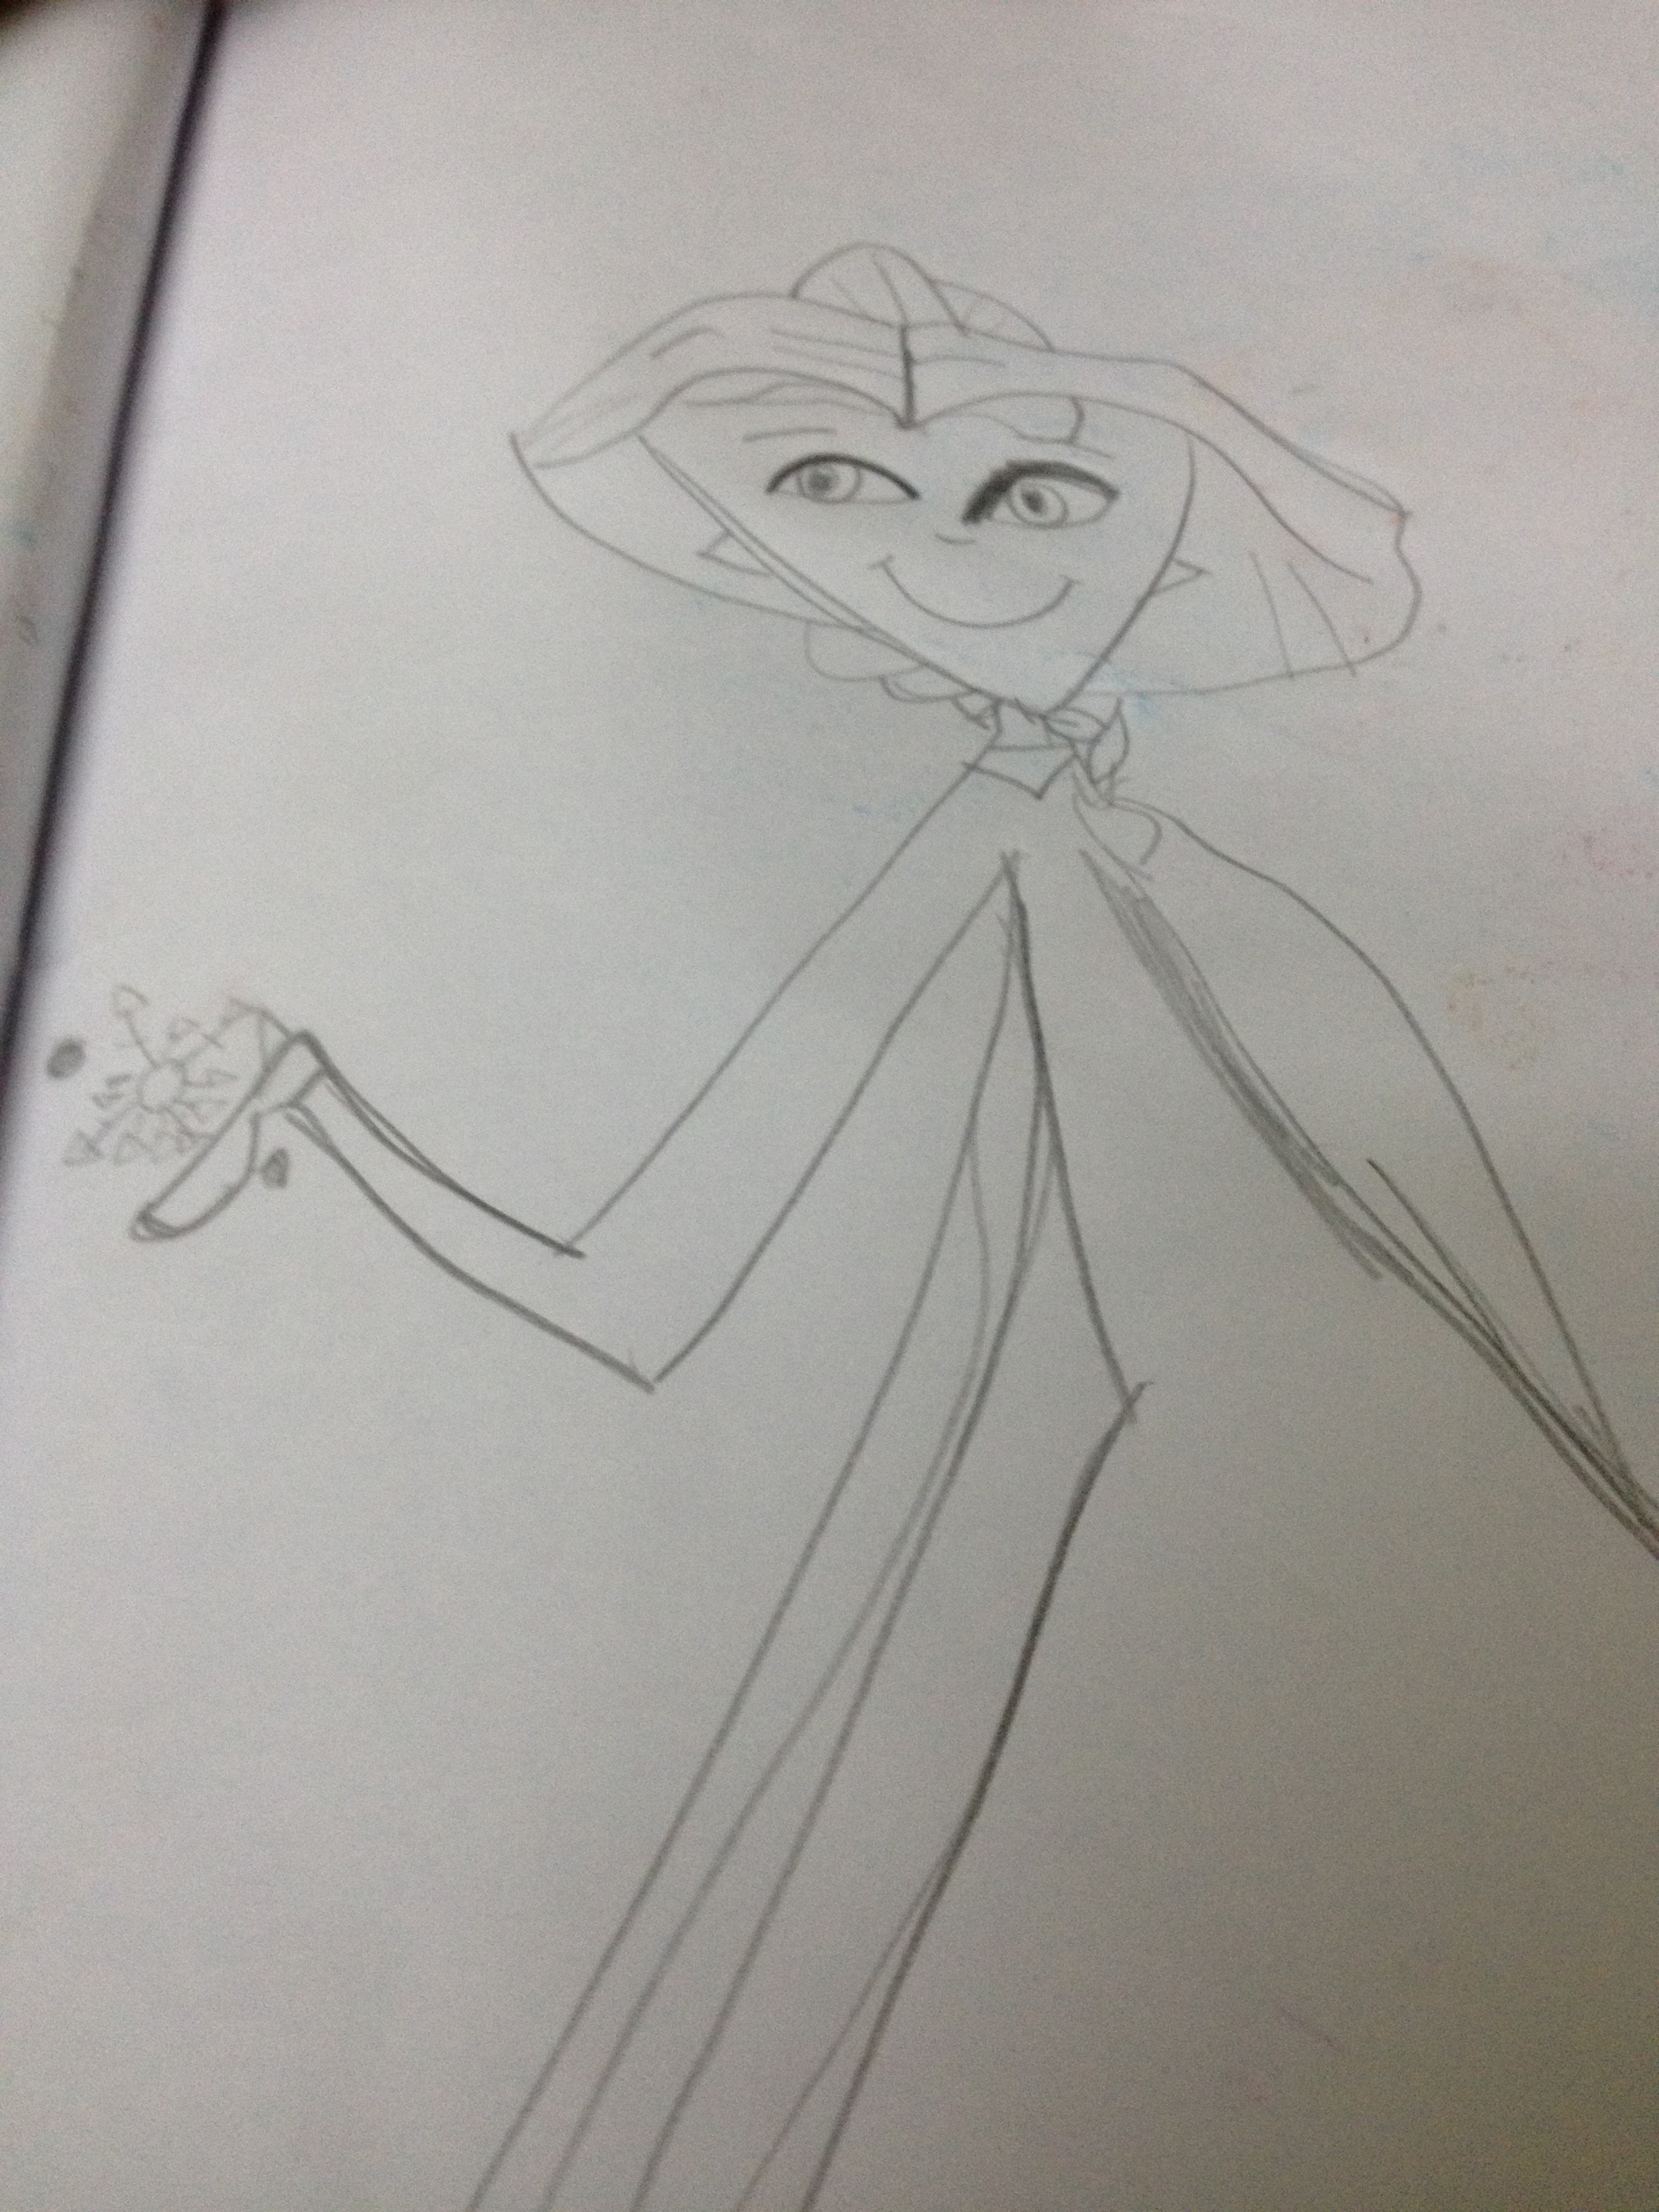 She followed instructions from Art for Kids Hub to create Princess Elsa 